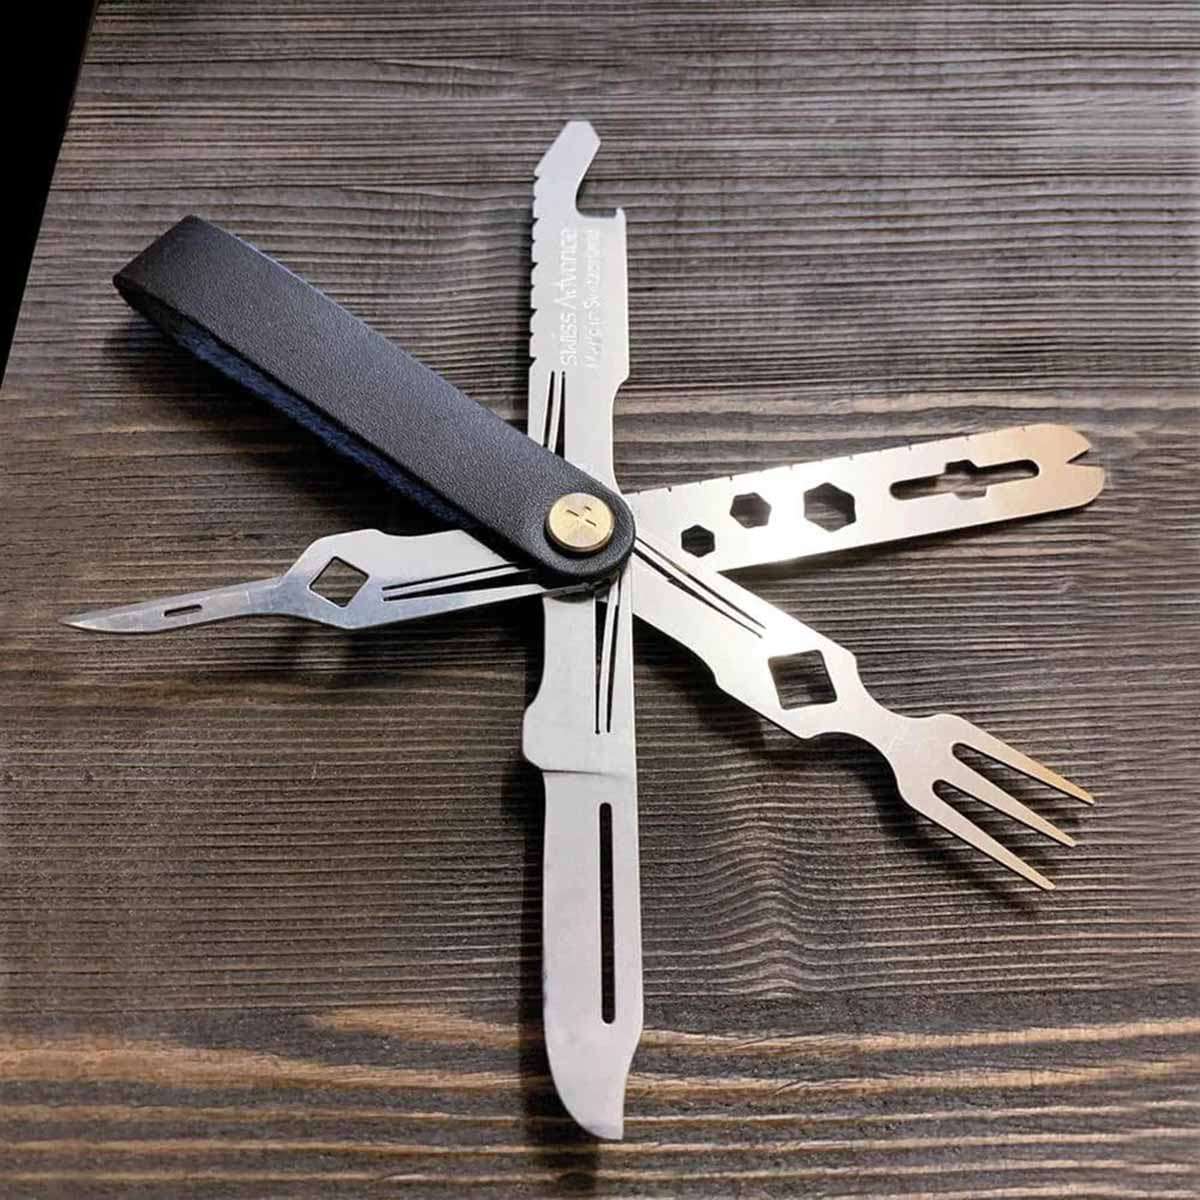 Swiss Advance CRONO N5 Pocket Knife Multi Tool